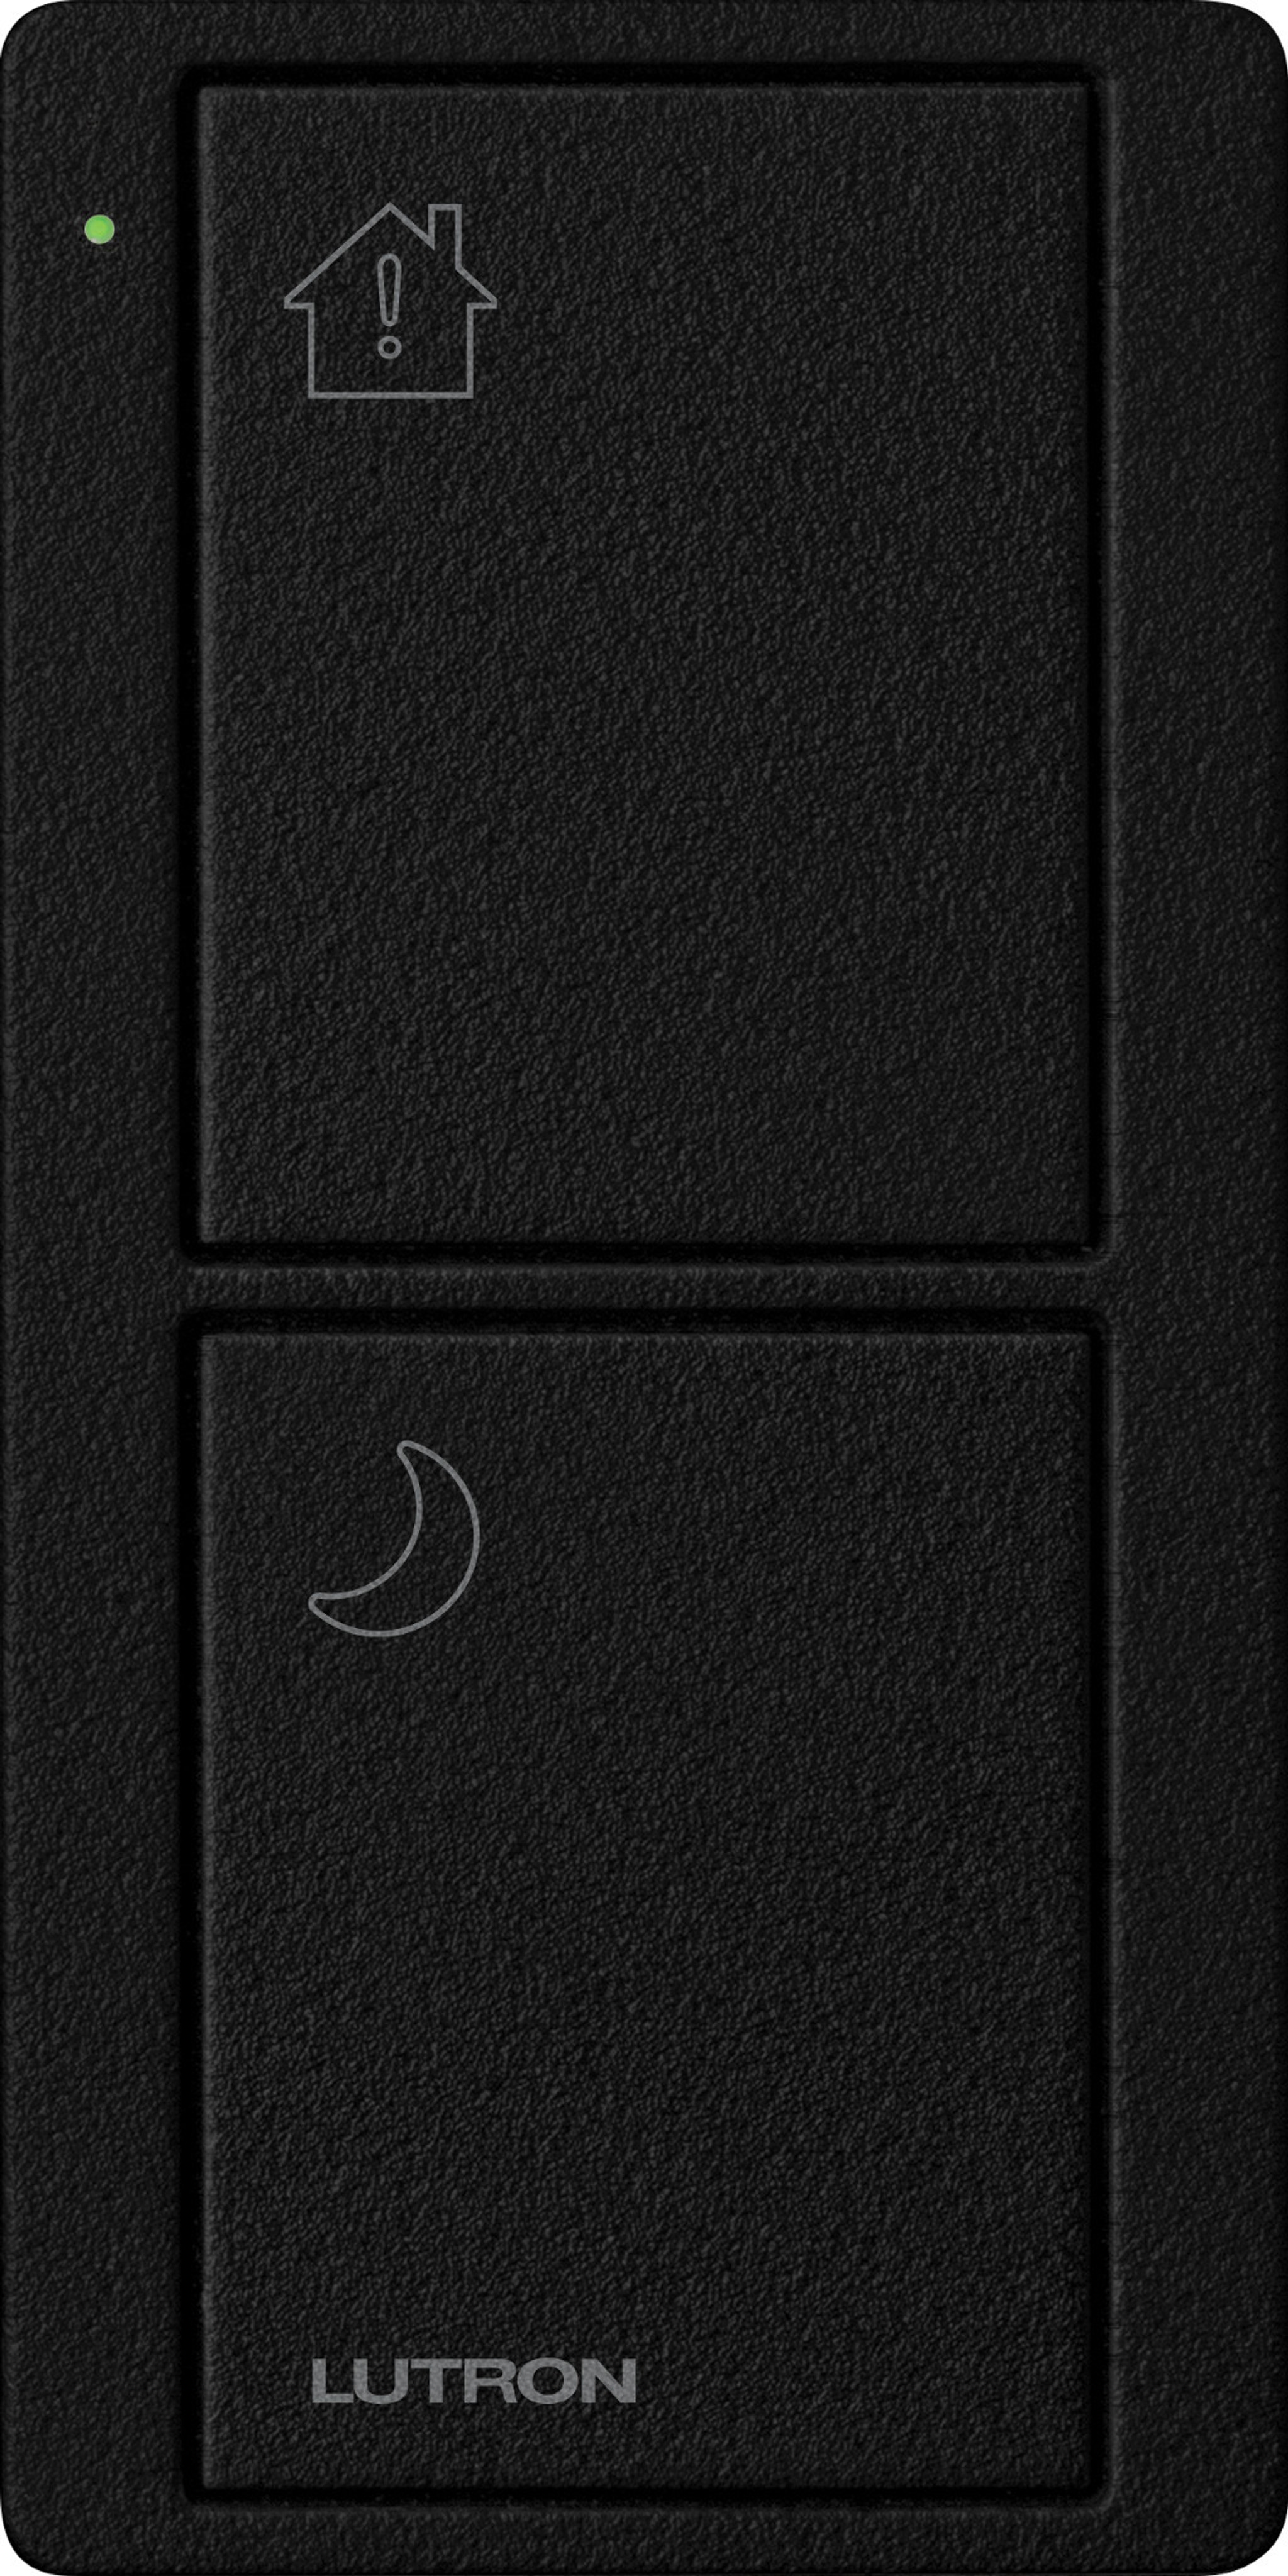 Lutron Pico RF 2 Button (Black) (Bedside Control)